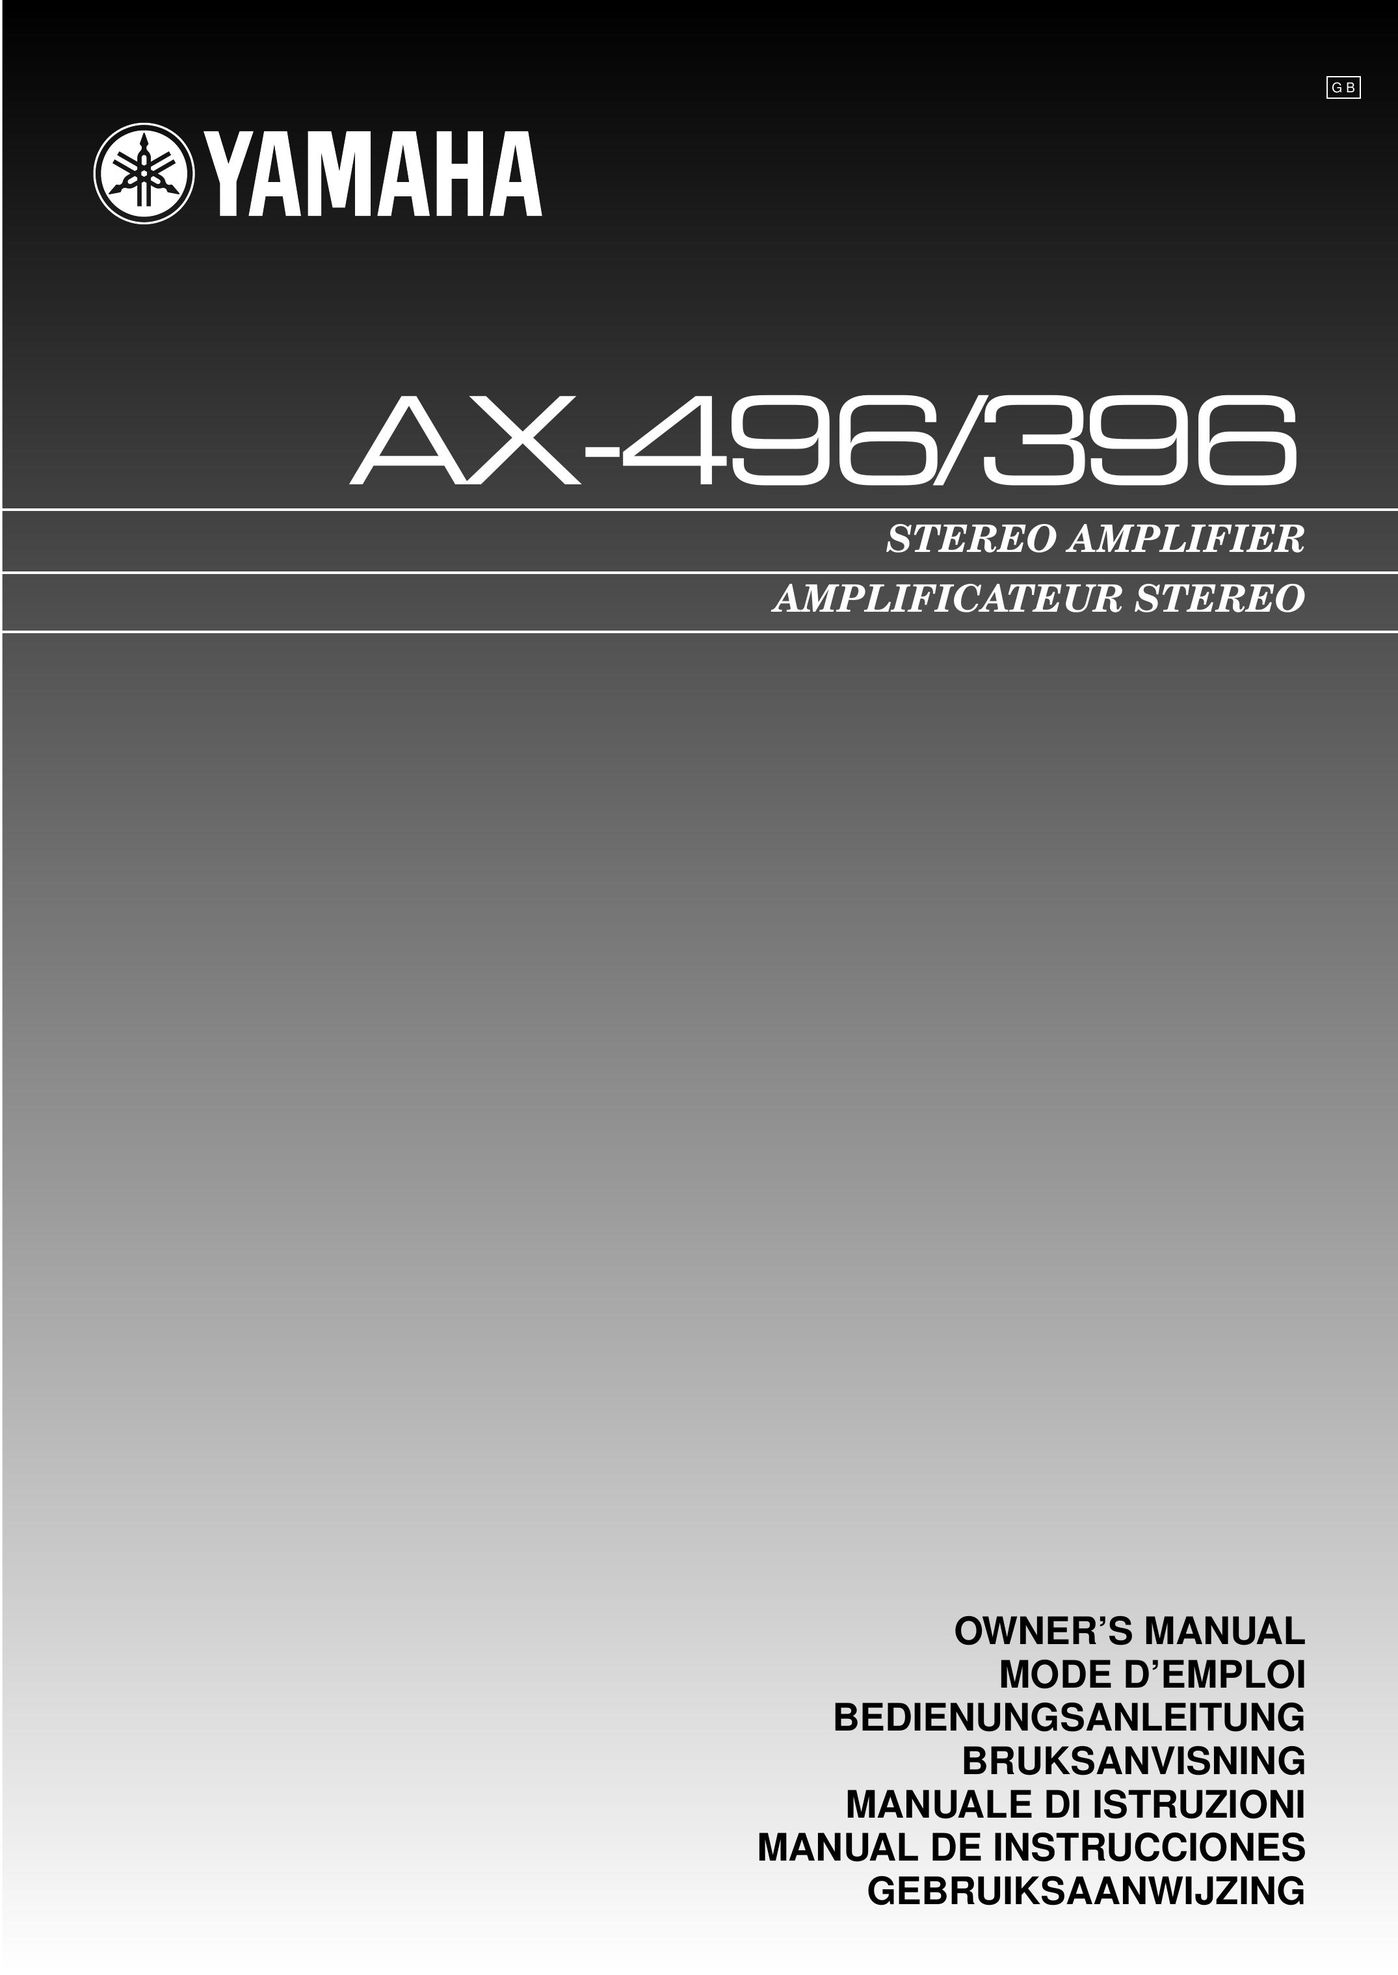 Yamaha 396 Stereo Amplifier User Manual